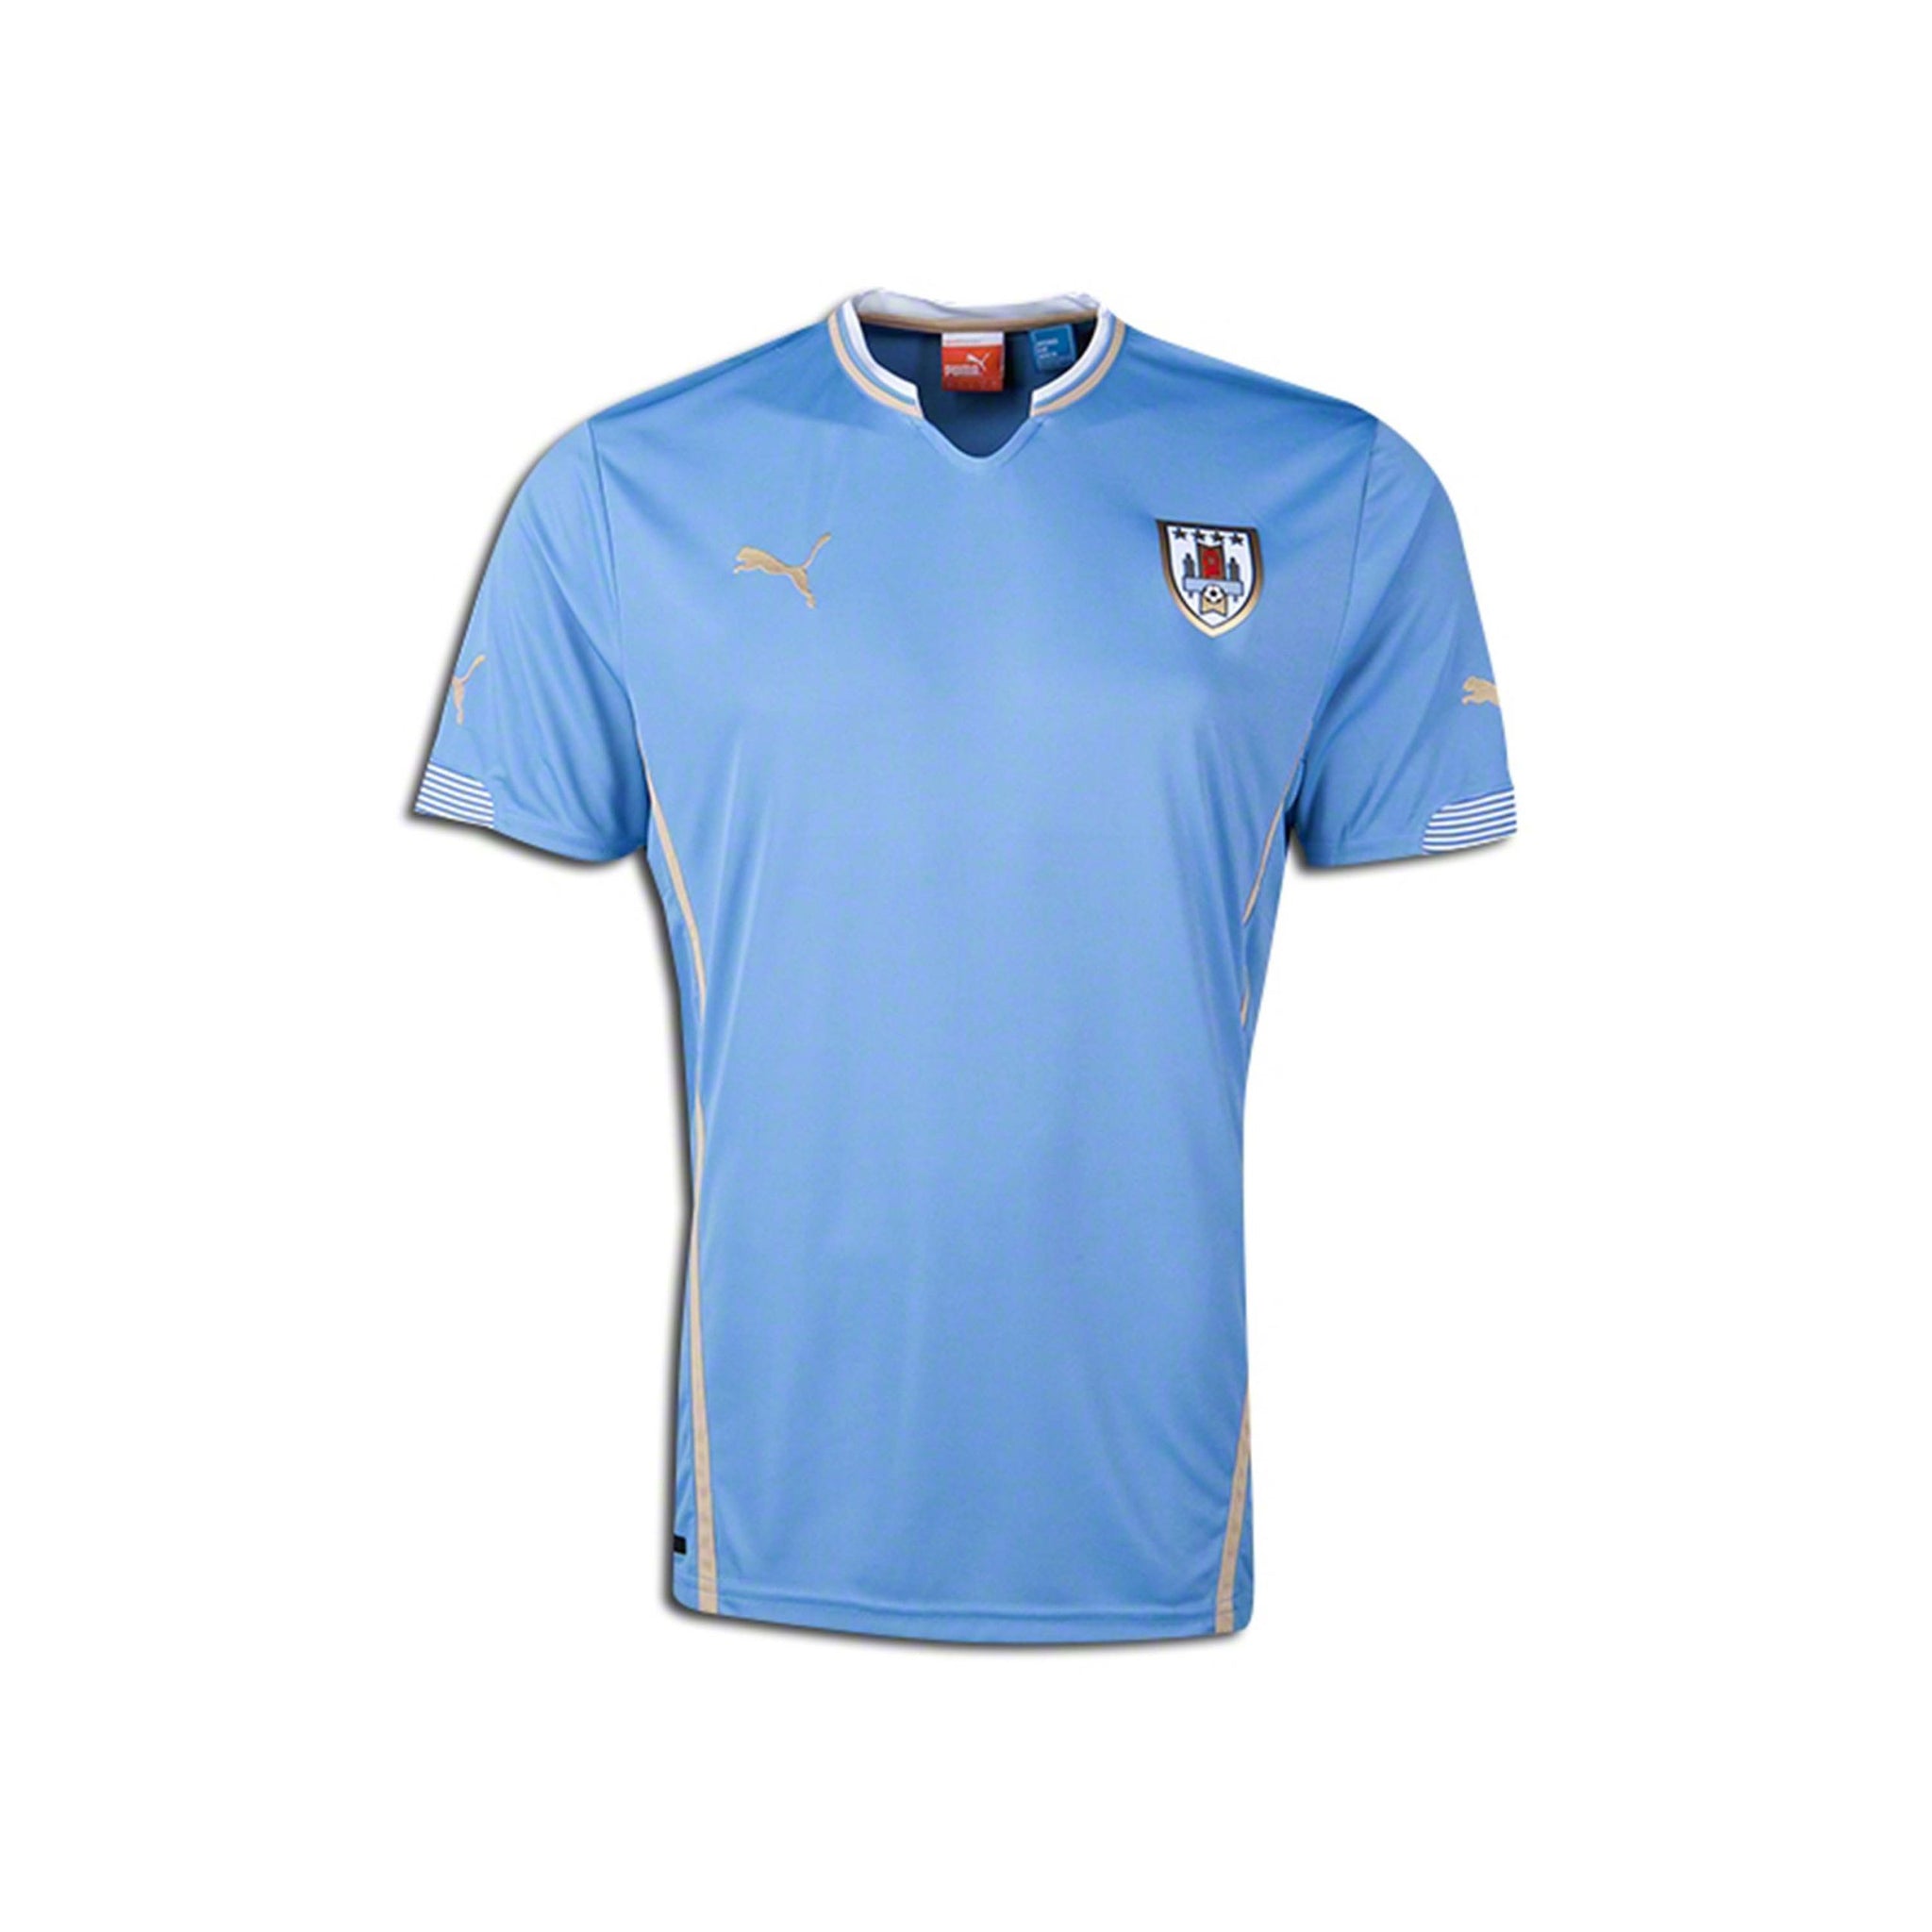 uruguay 2014 jersey